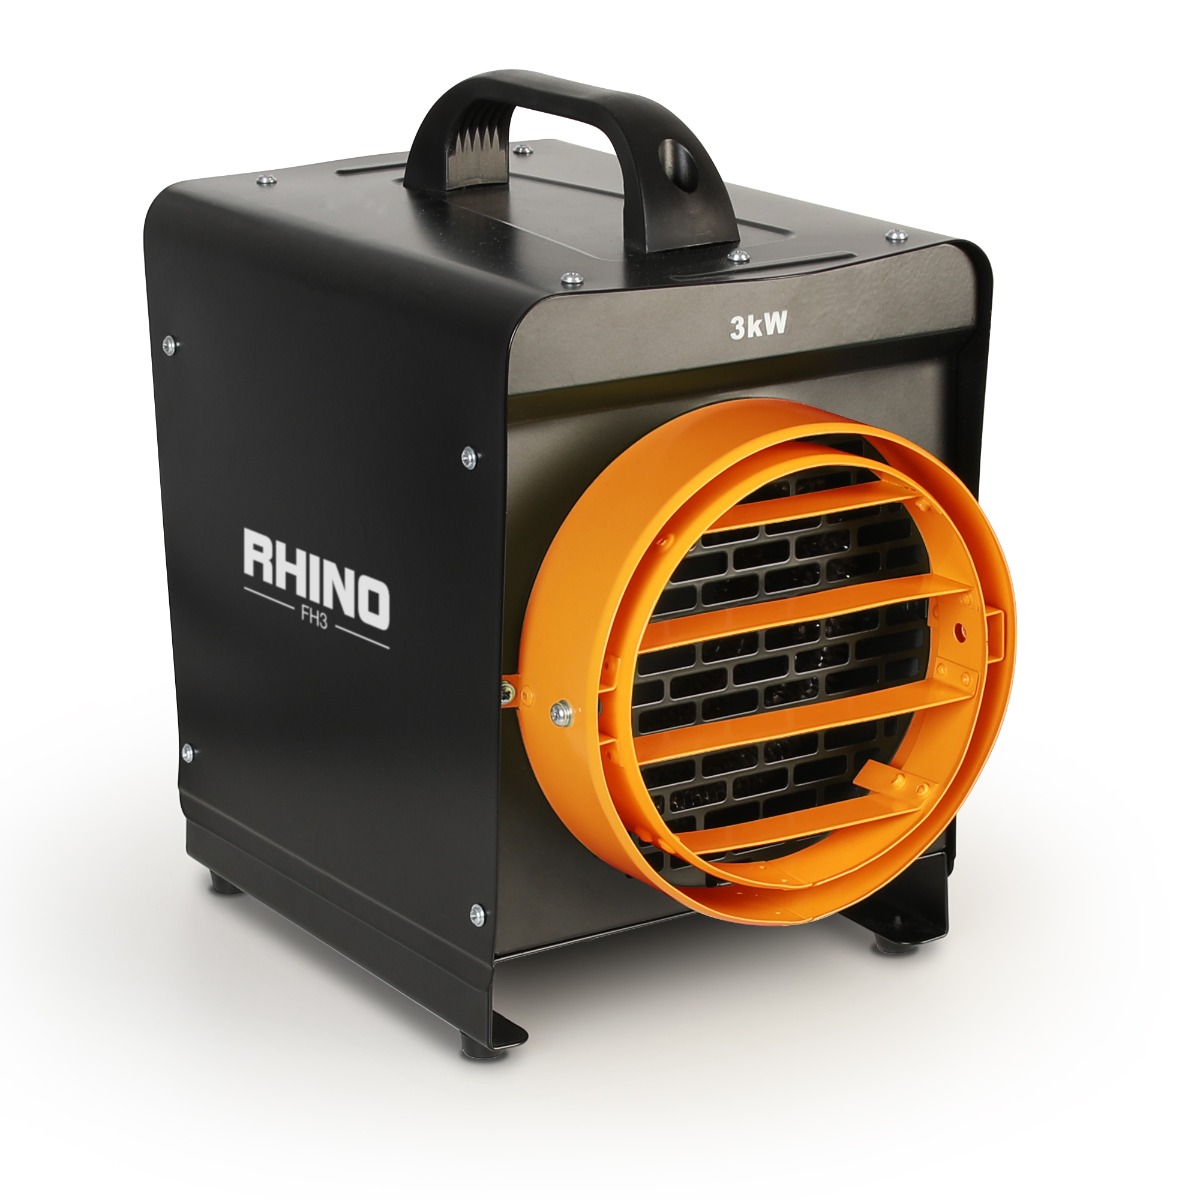 Rhino FH3 230v 2.8kw industrial fan heater 230v